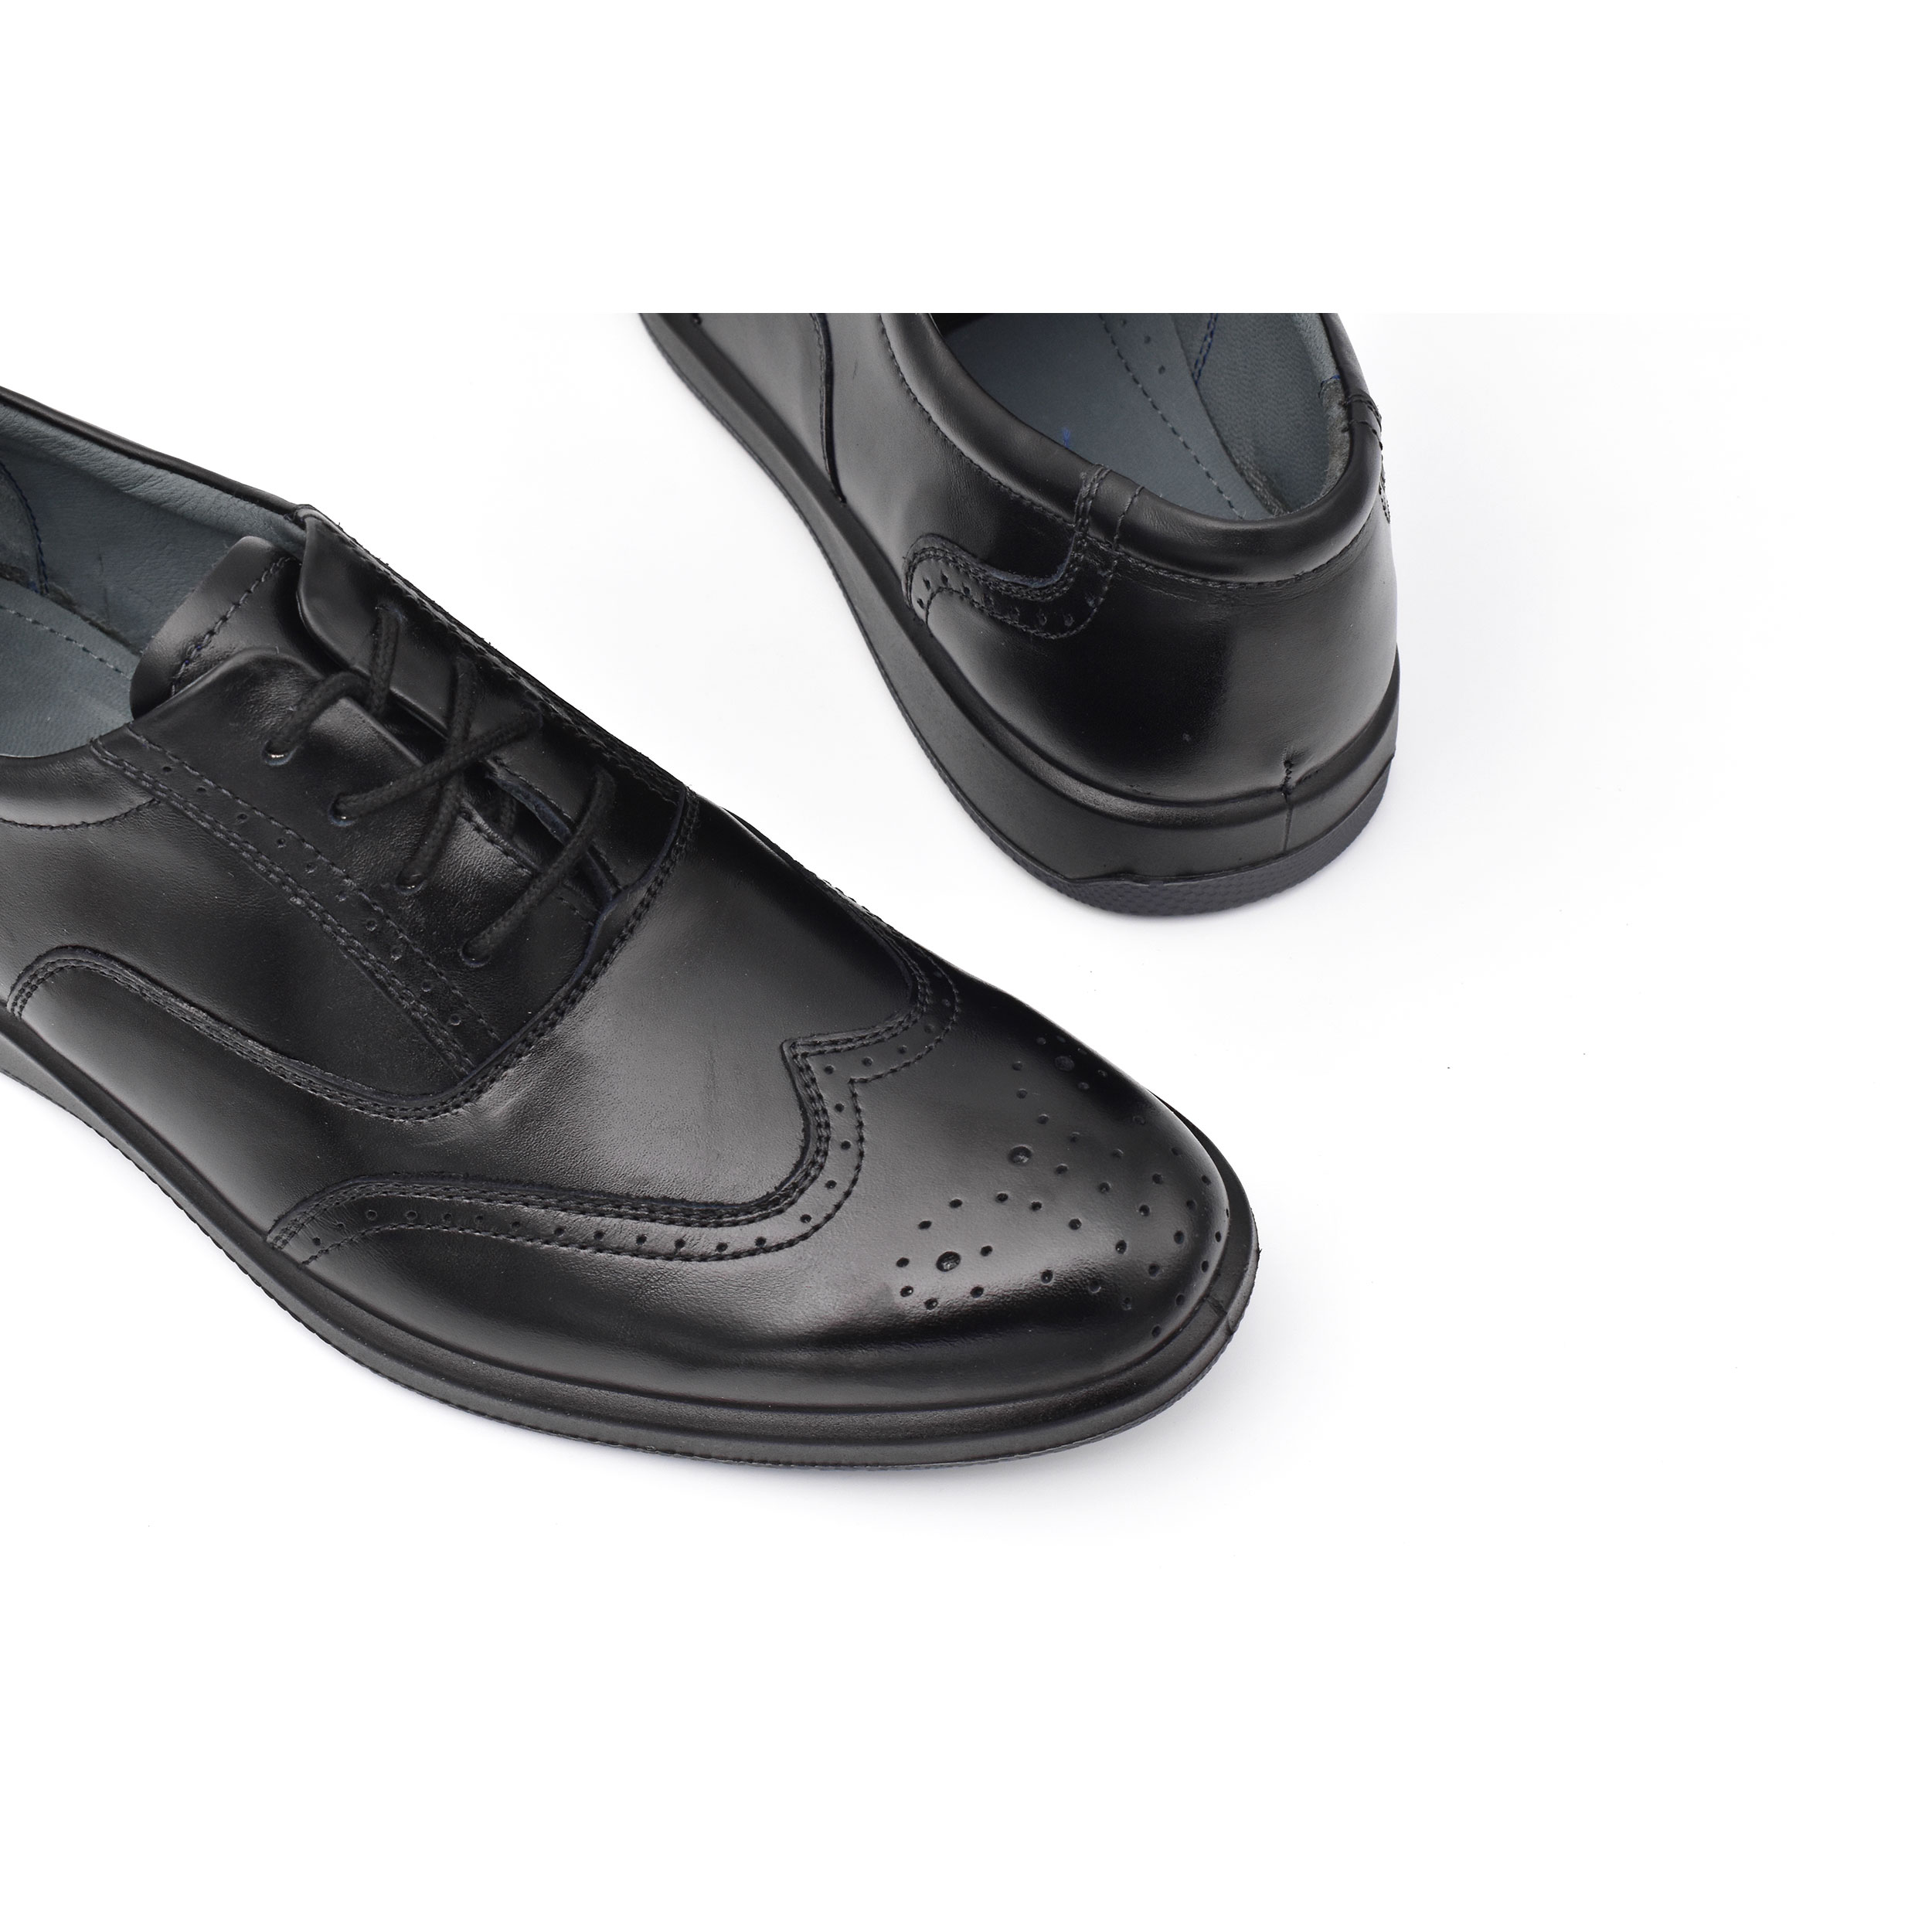 کفش روزمره مردانه پاما مدل F0 کد G1125 -  - 6